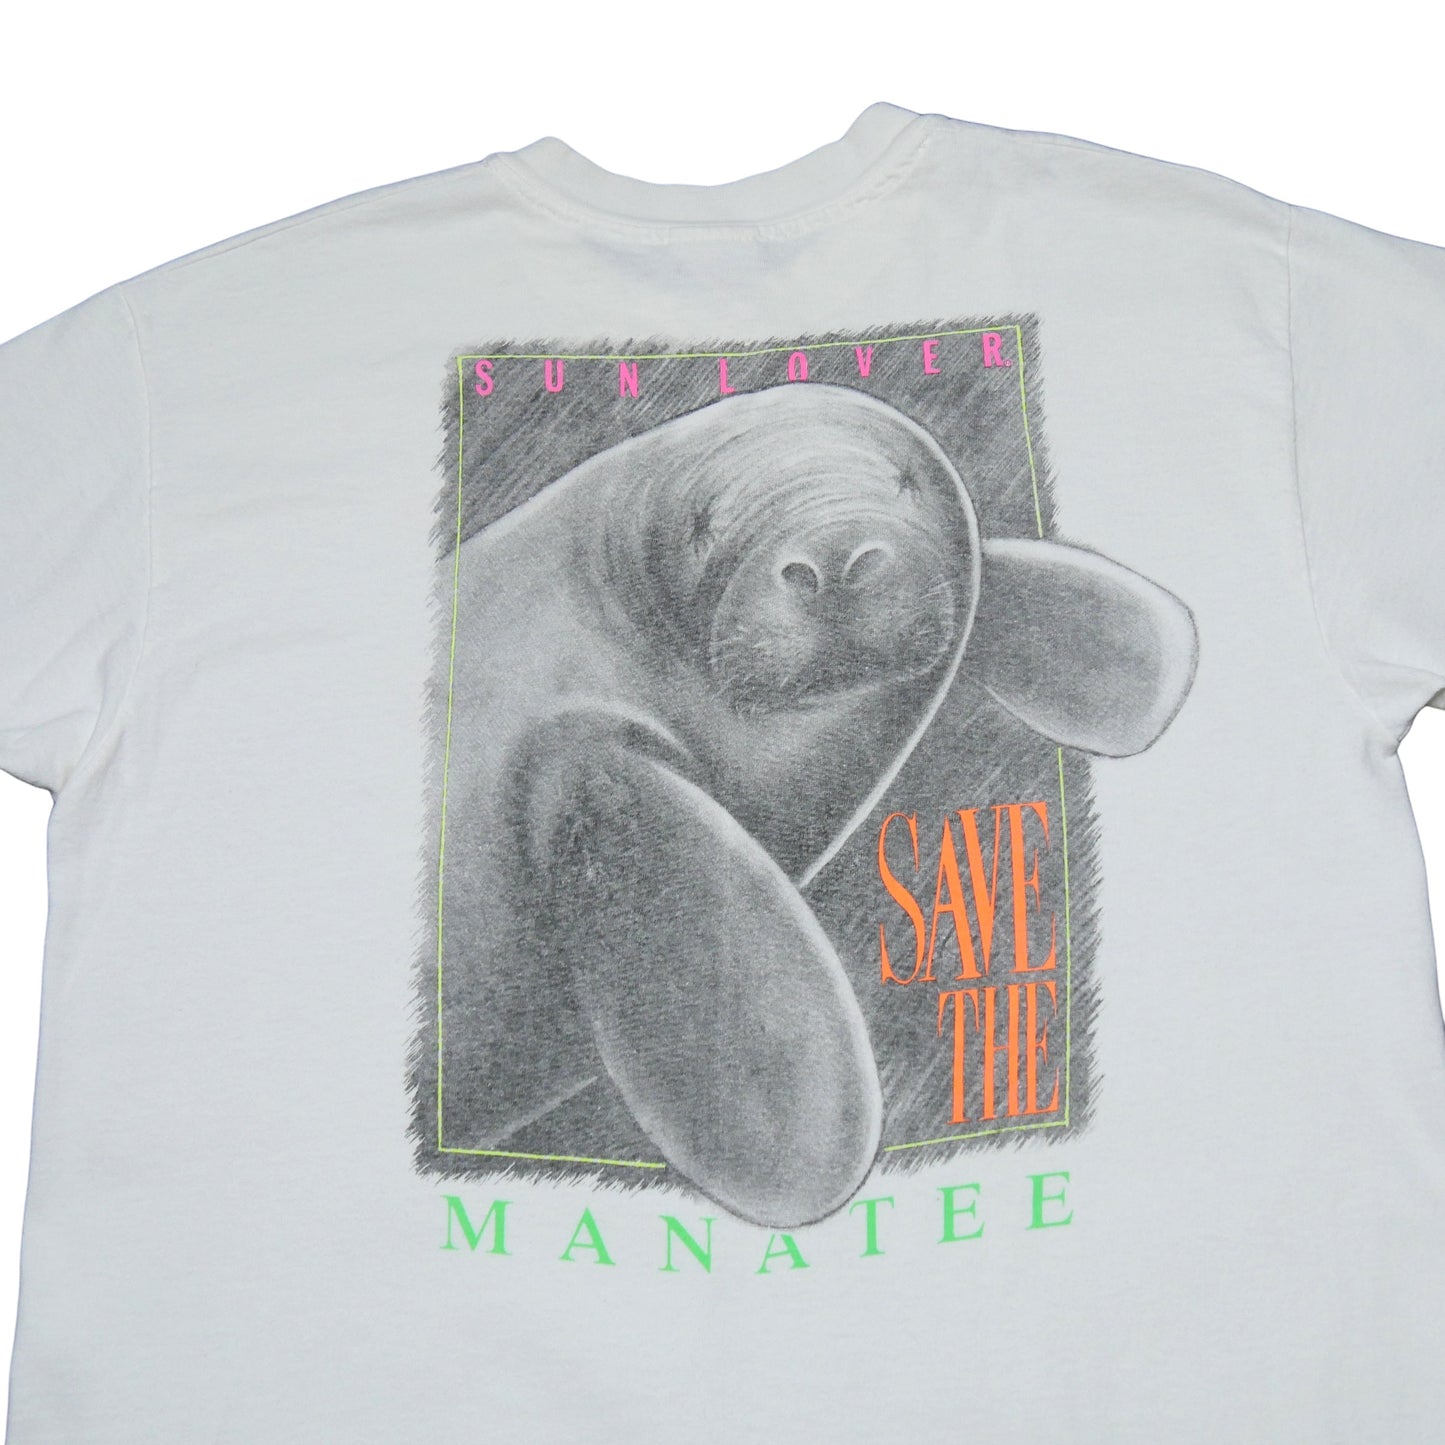 Save the Manatee Sunlover Shirt - Large